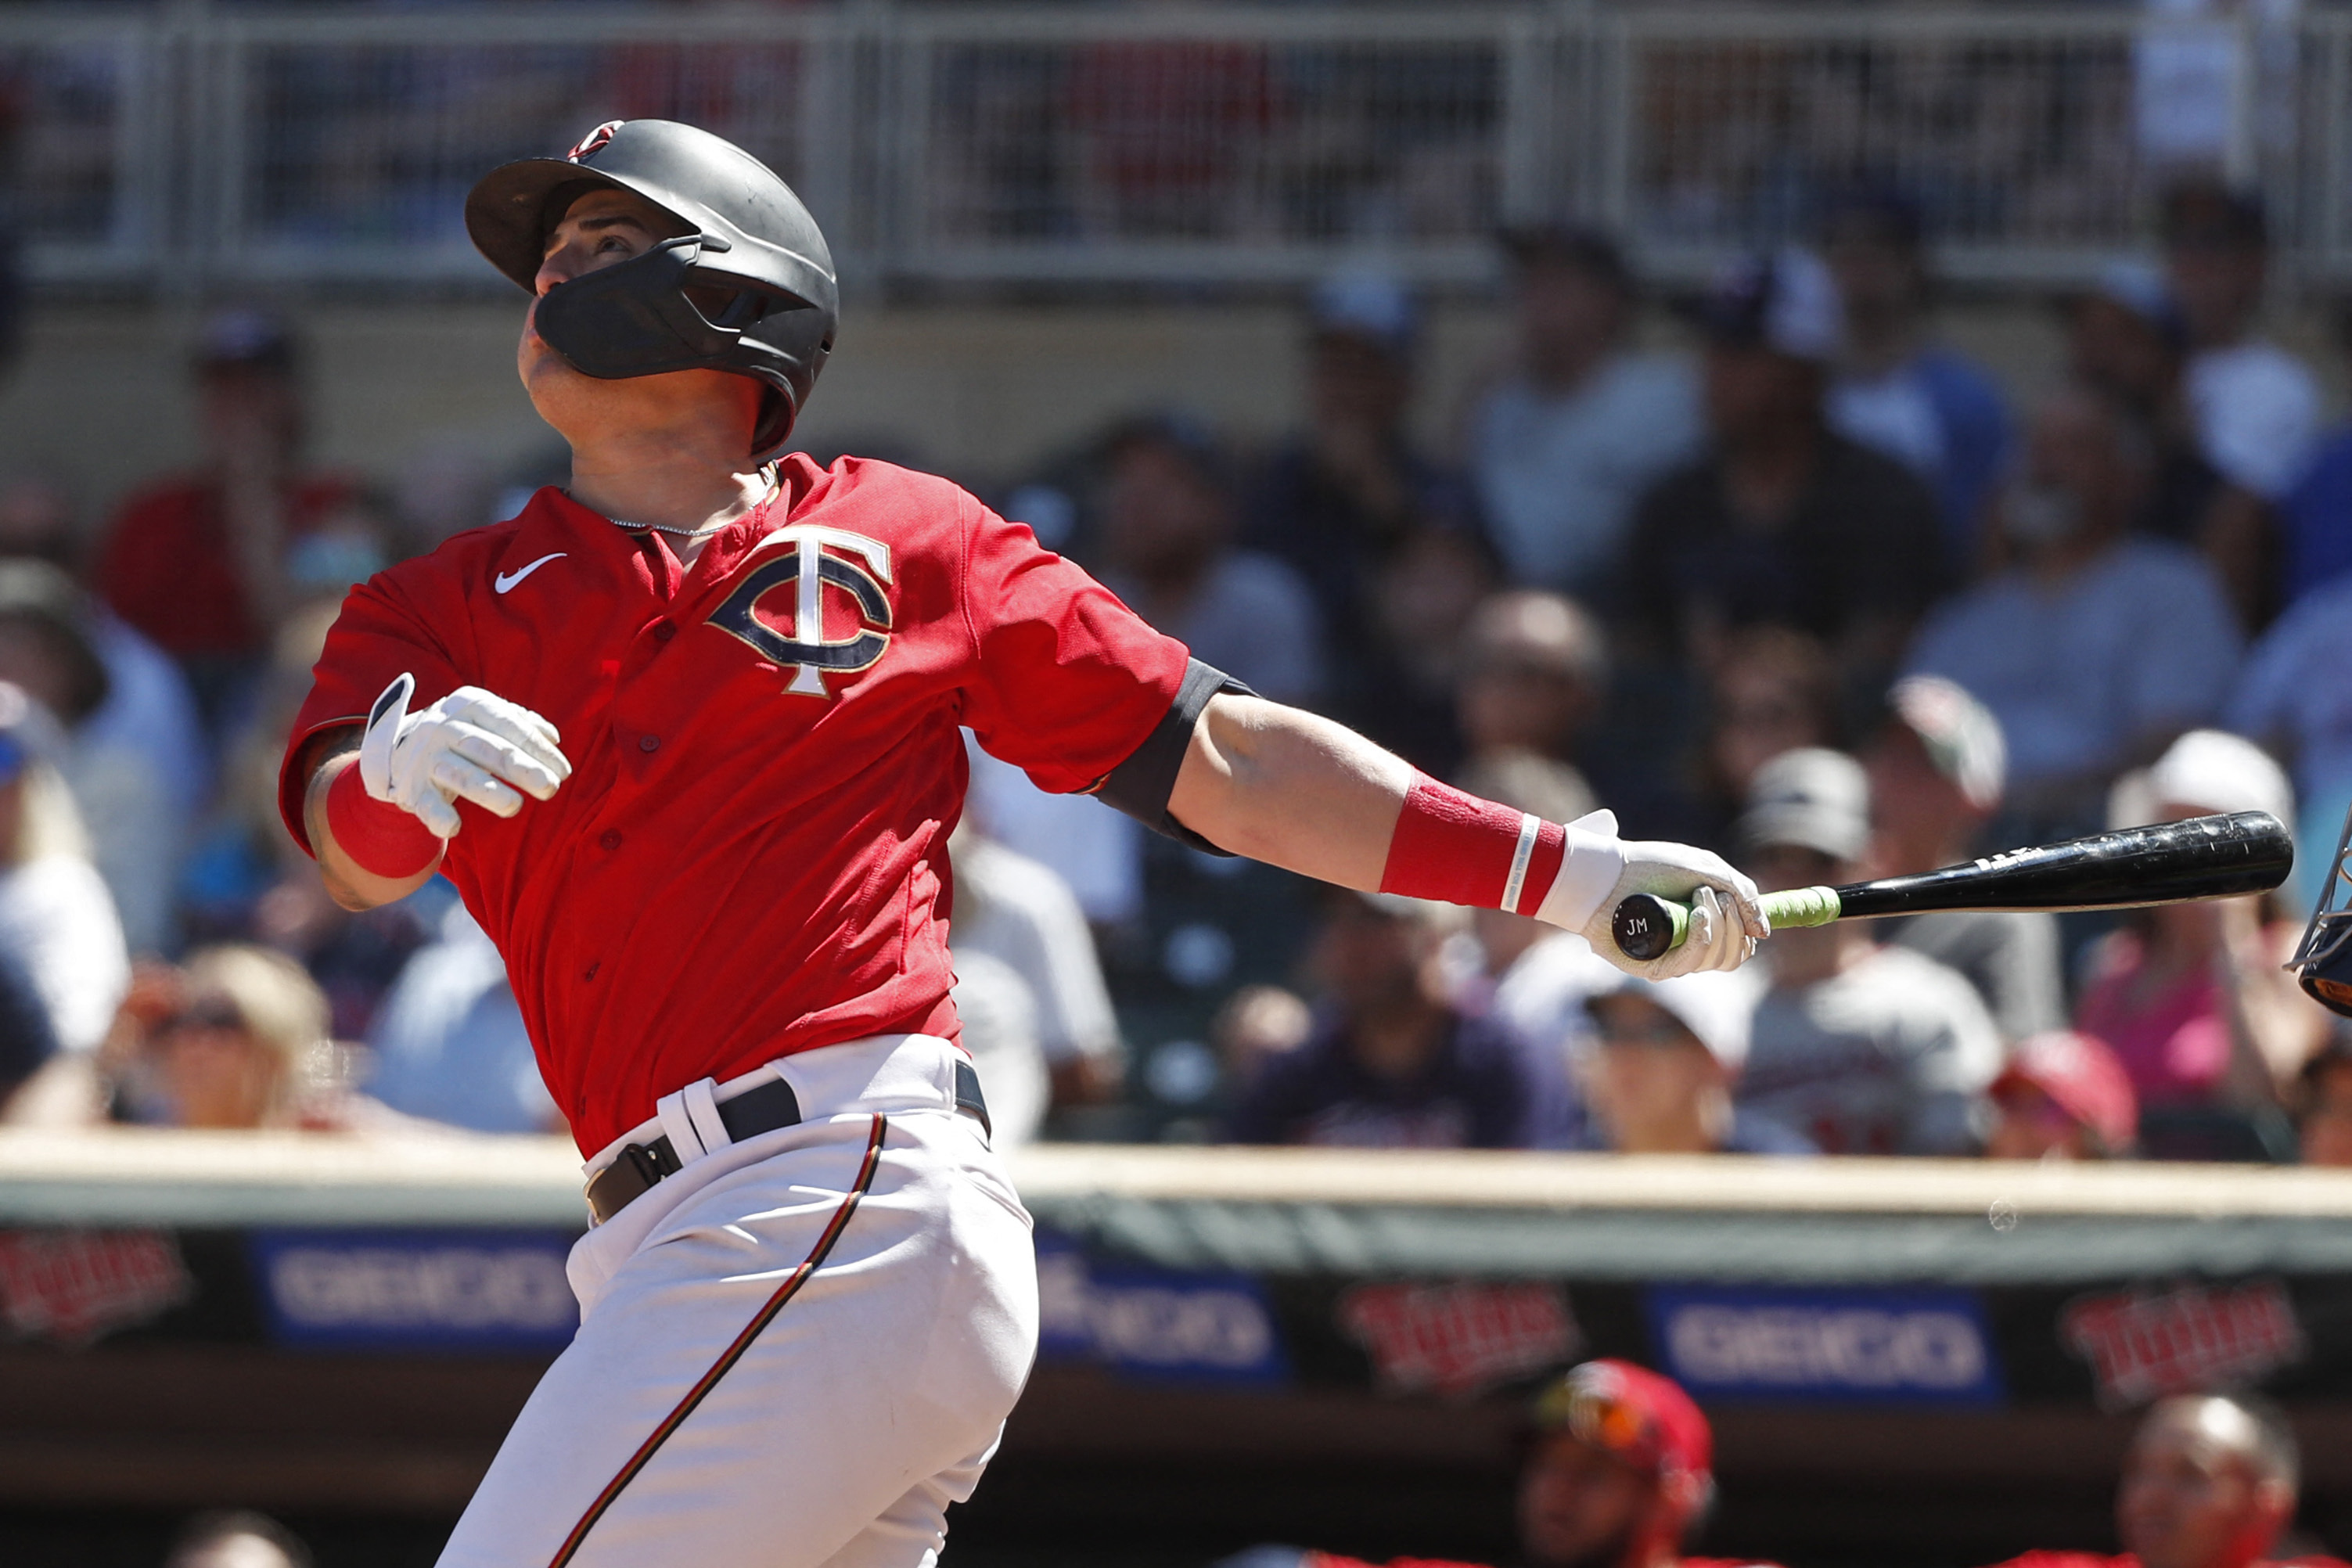 Jake Marisnick's bat, glove help Astros top Red Sox 4-3